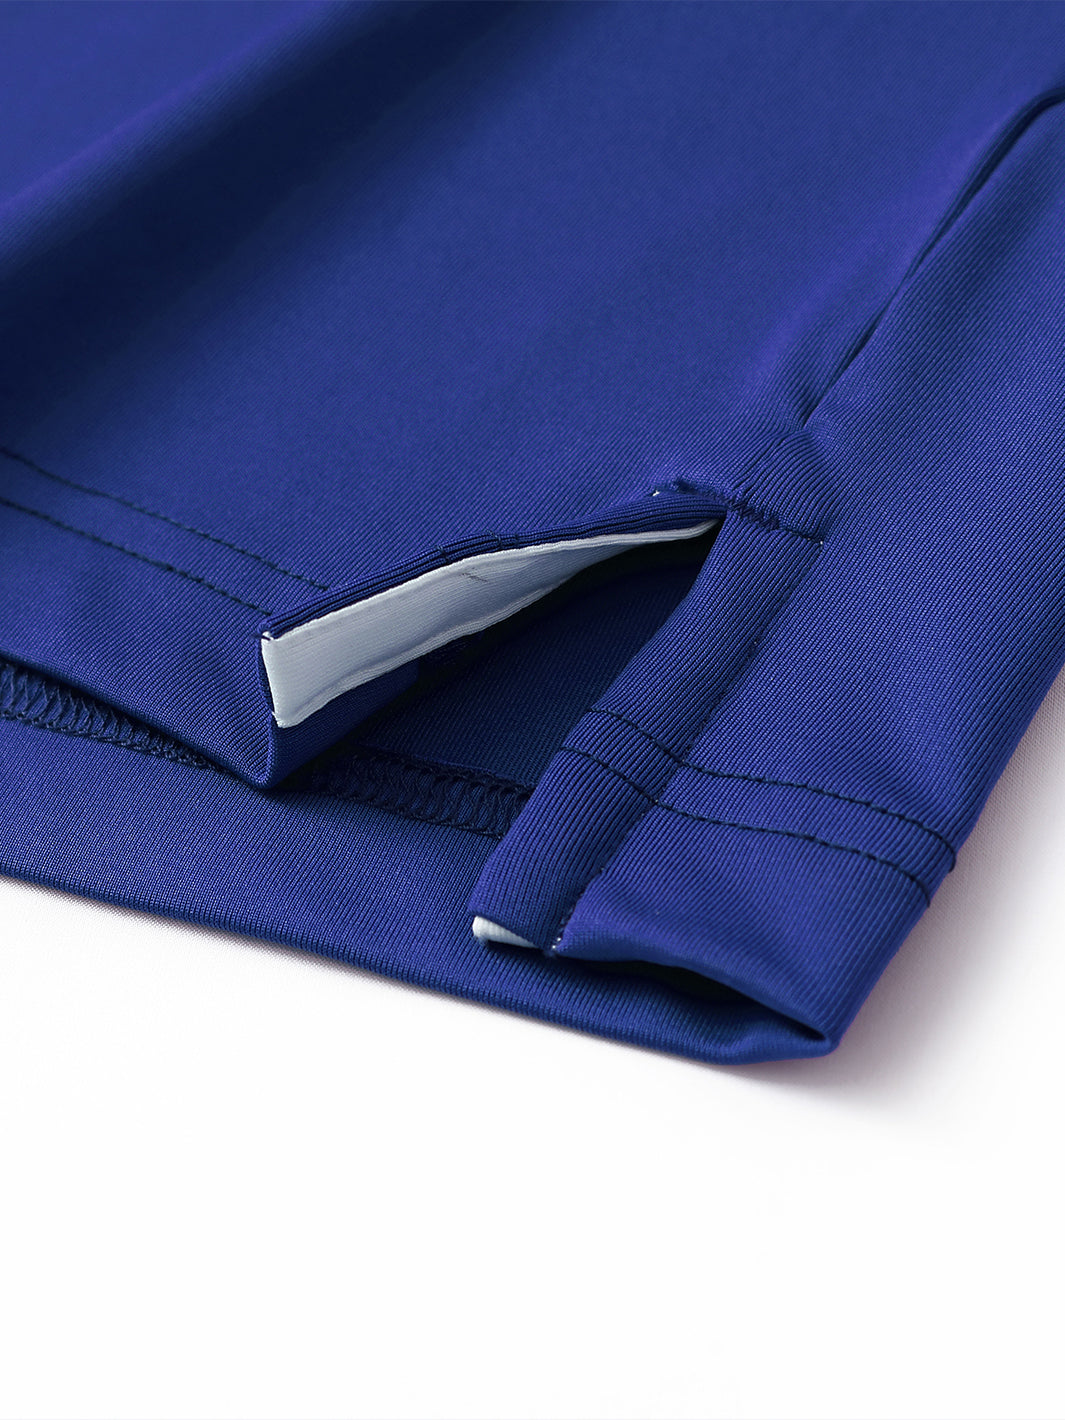 Men's Solid Color Block Patchwork Polo Shirts-Klein Blue